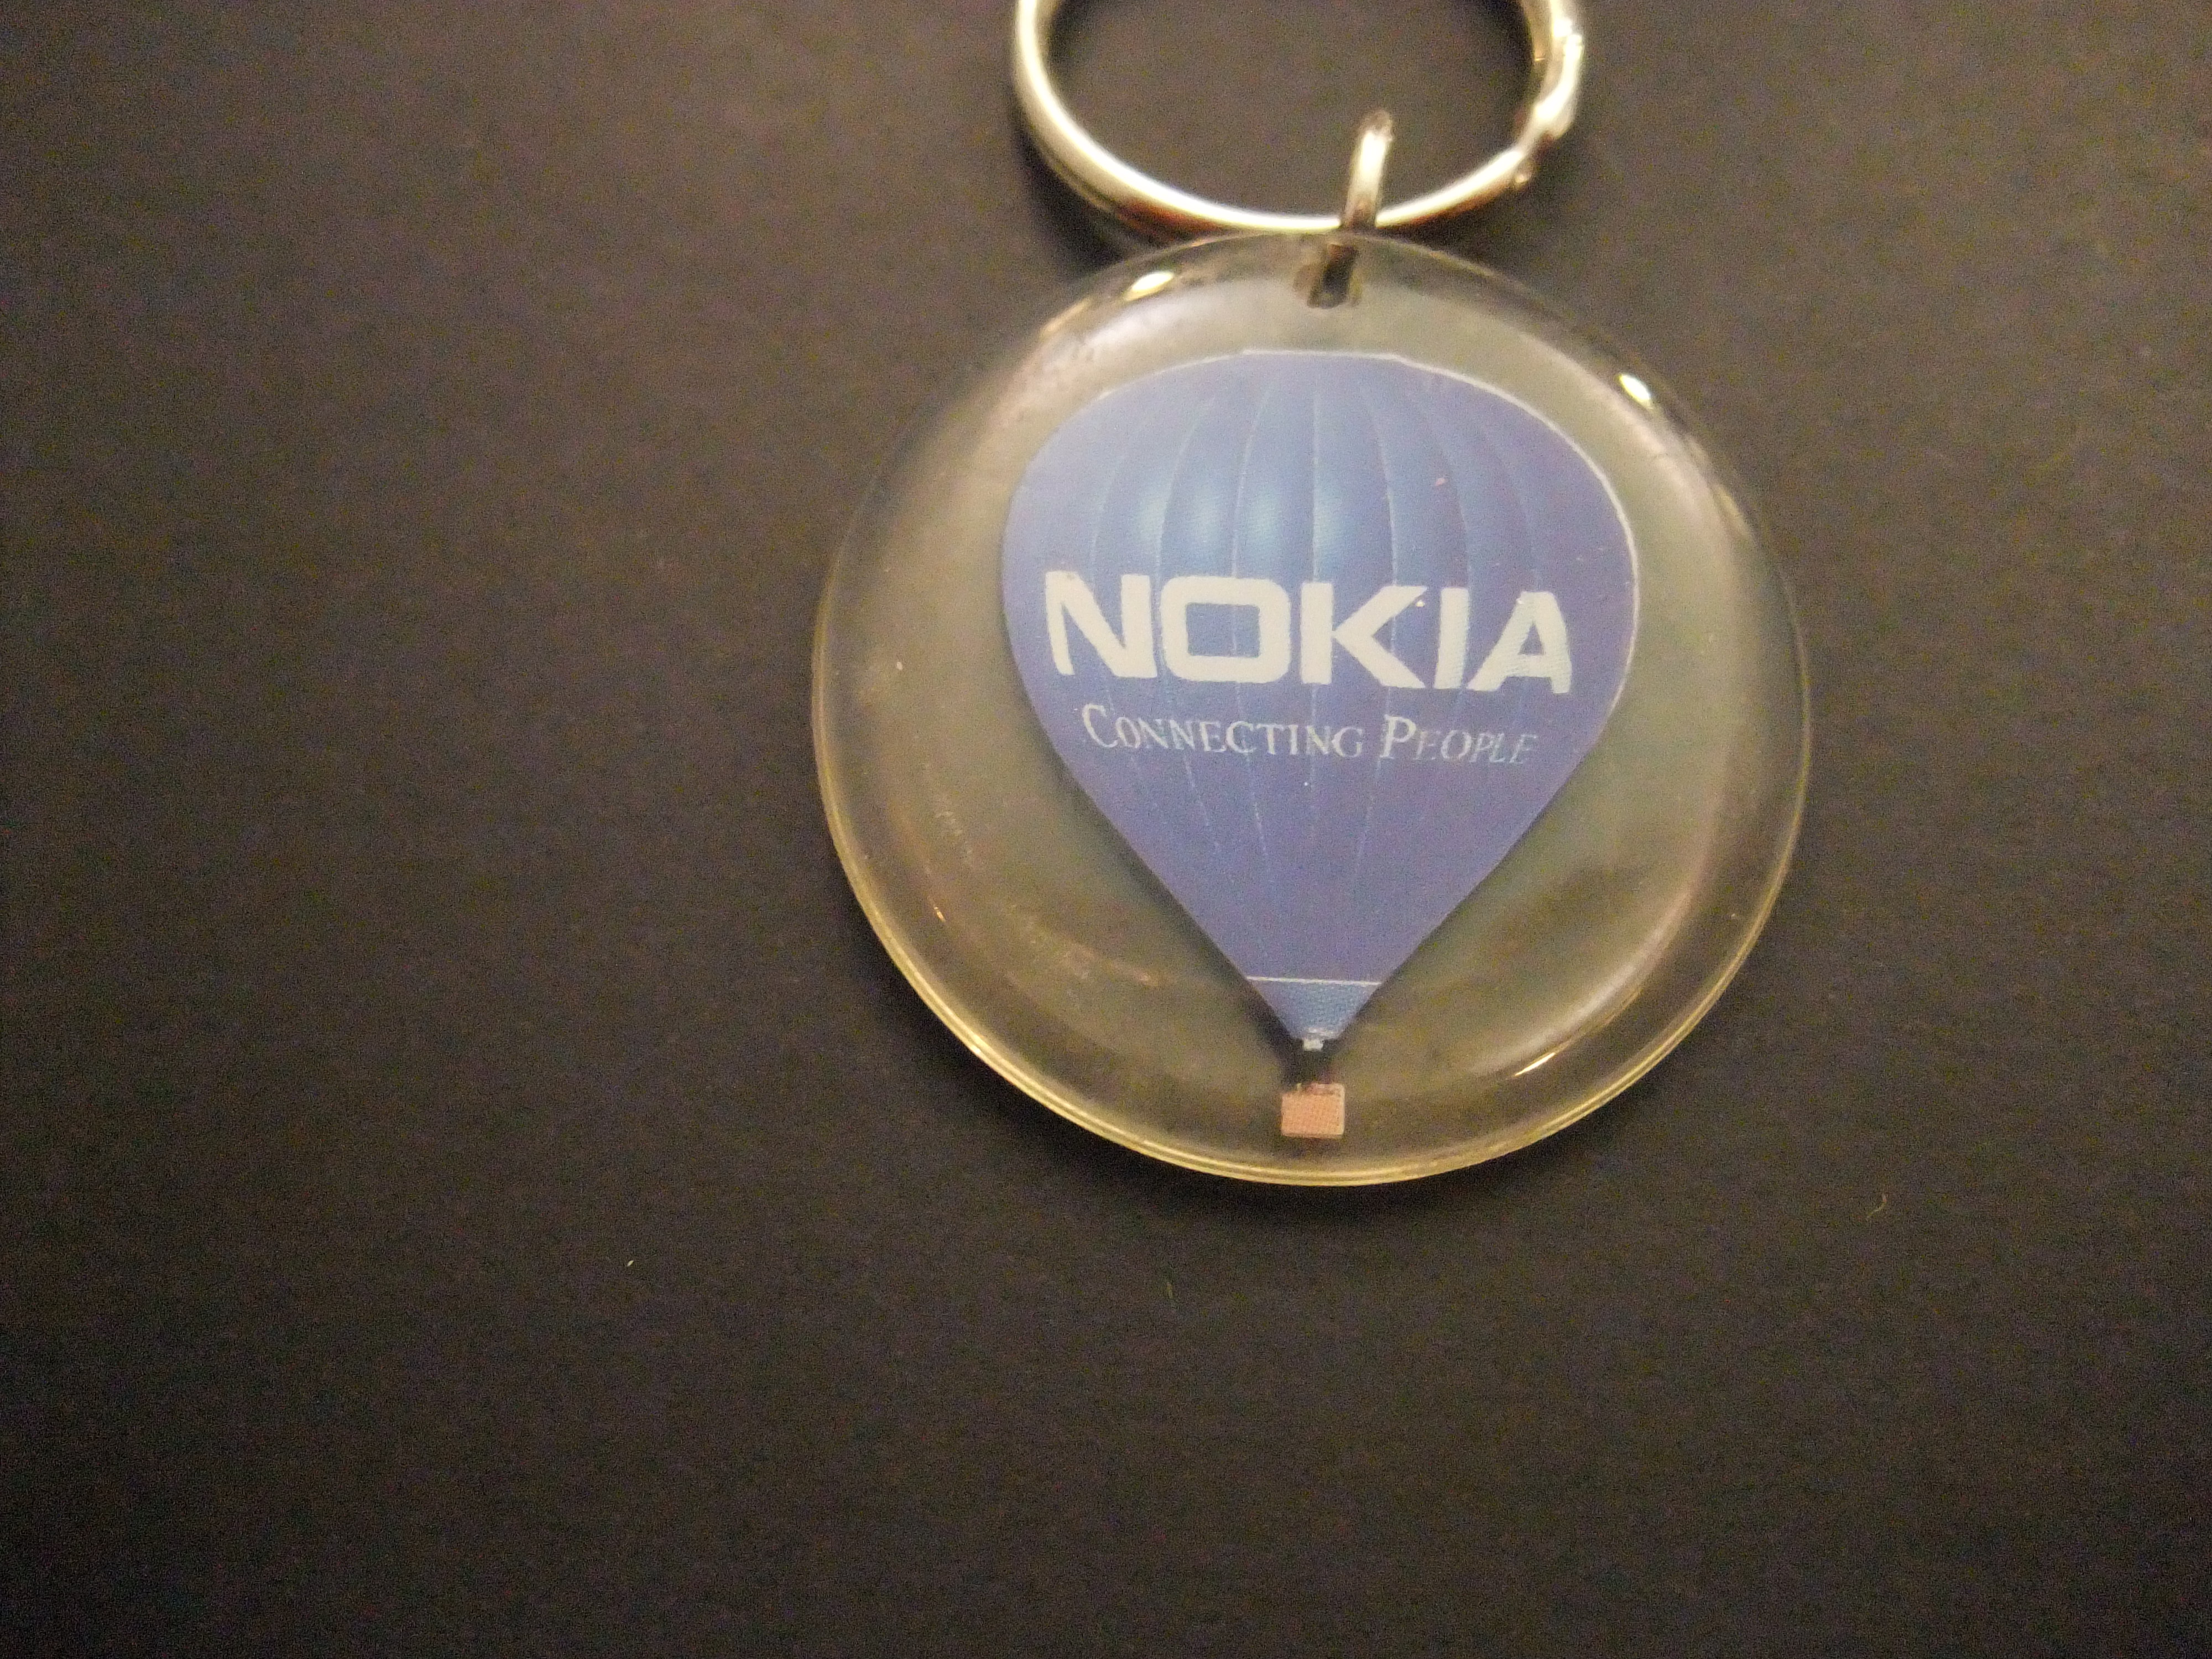 Nokia Connecting People luchtballon sleutelhanger